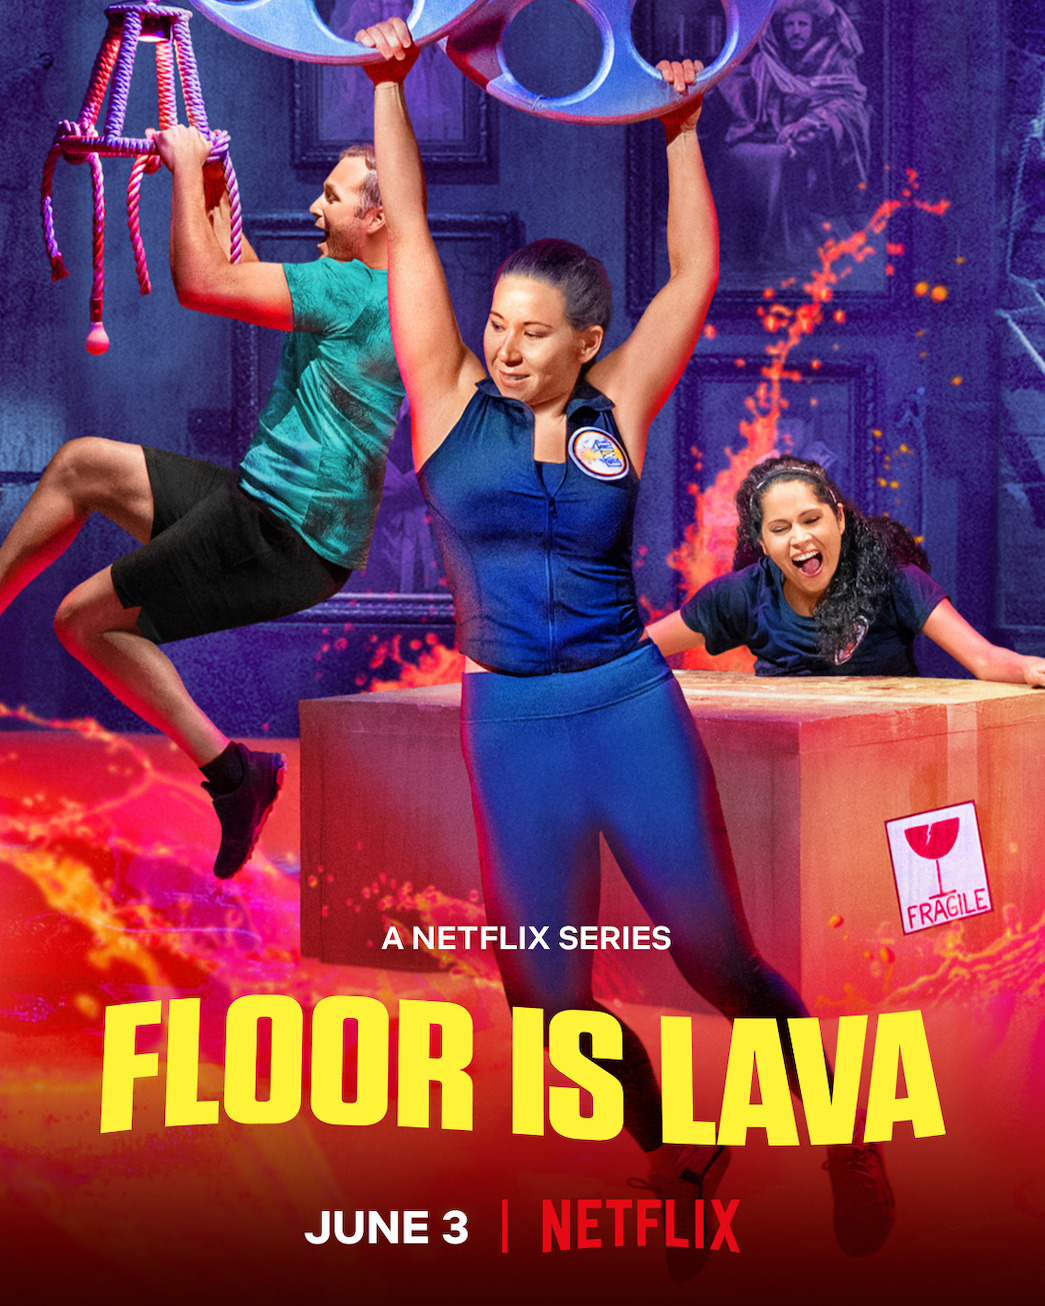 Is “Floor is Lava Season 2” on Netflix